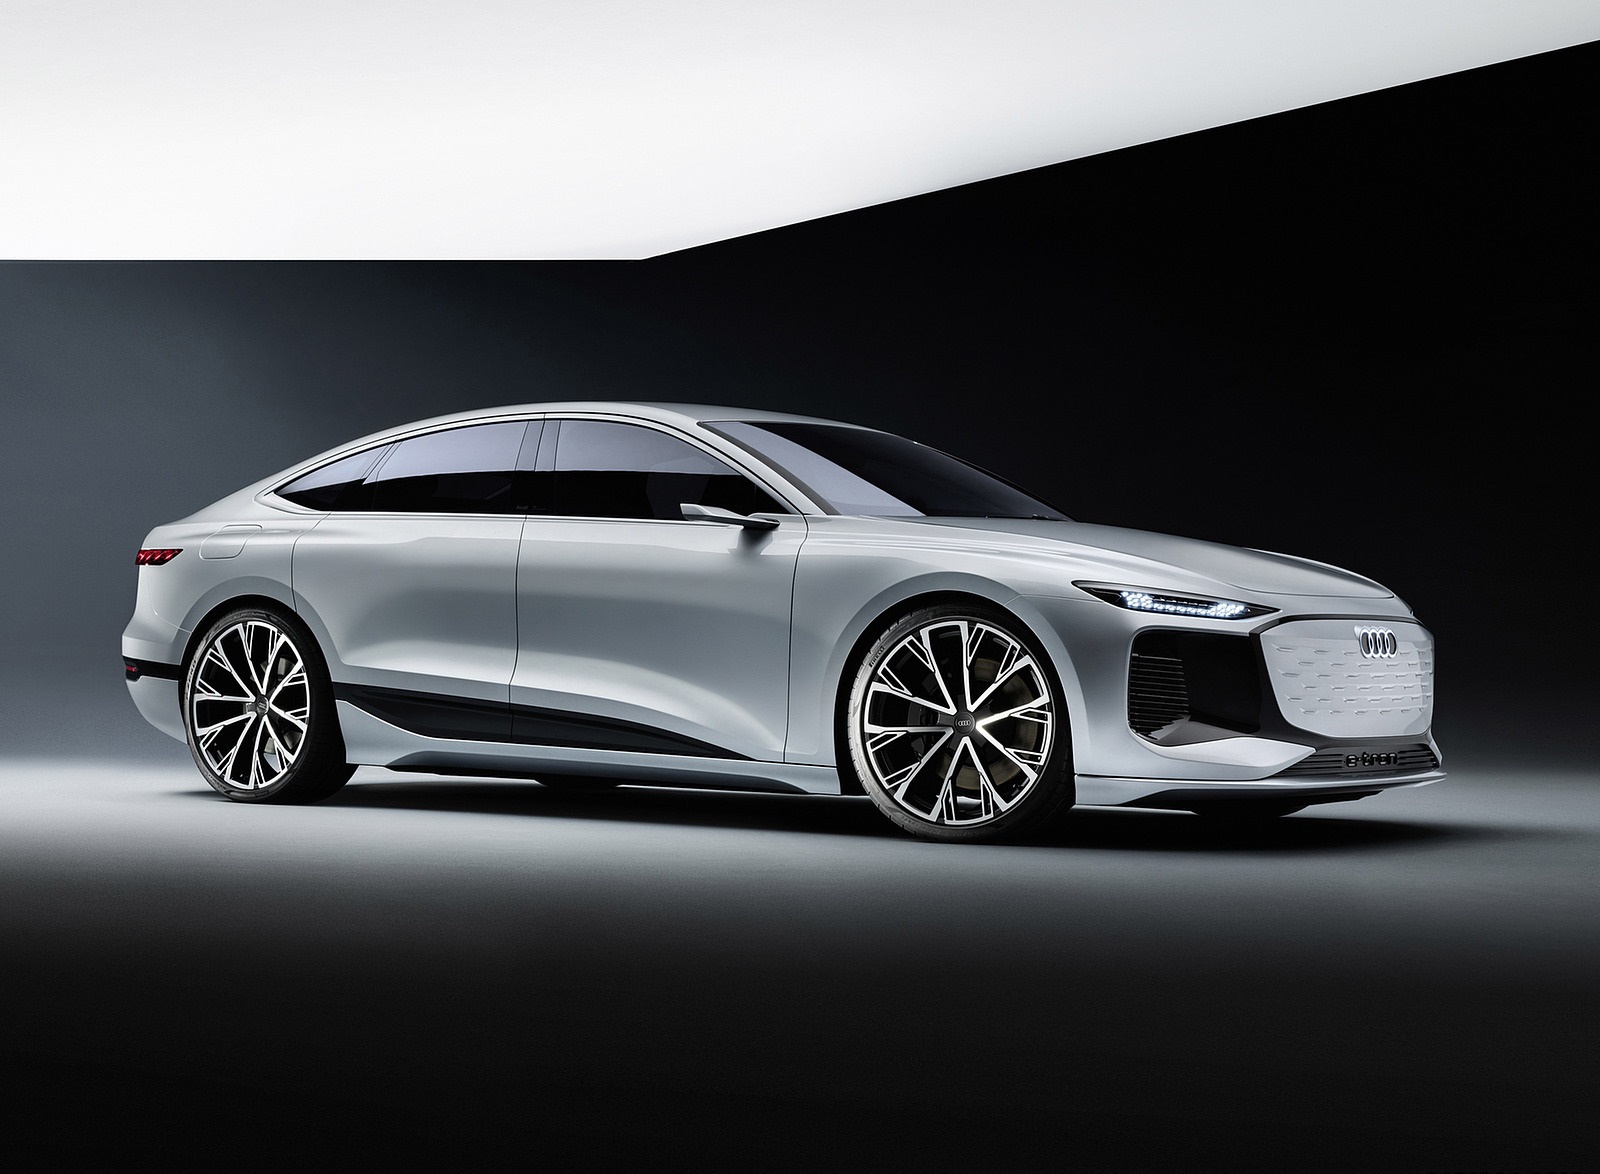 2021 Audi A6 e-tron Concept (Color: Helio Silver) Front Three-Quarter Wallpapers  #37 of 54